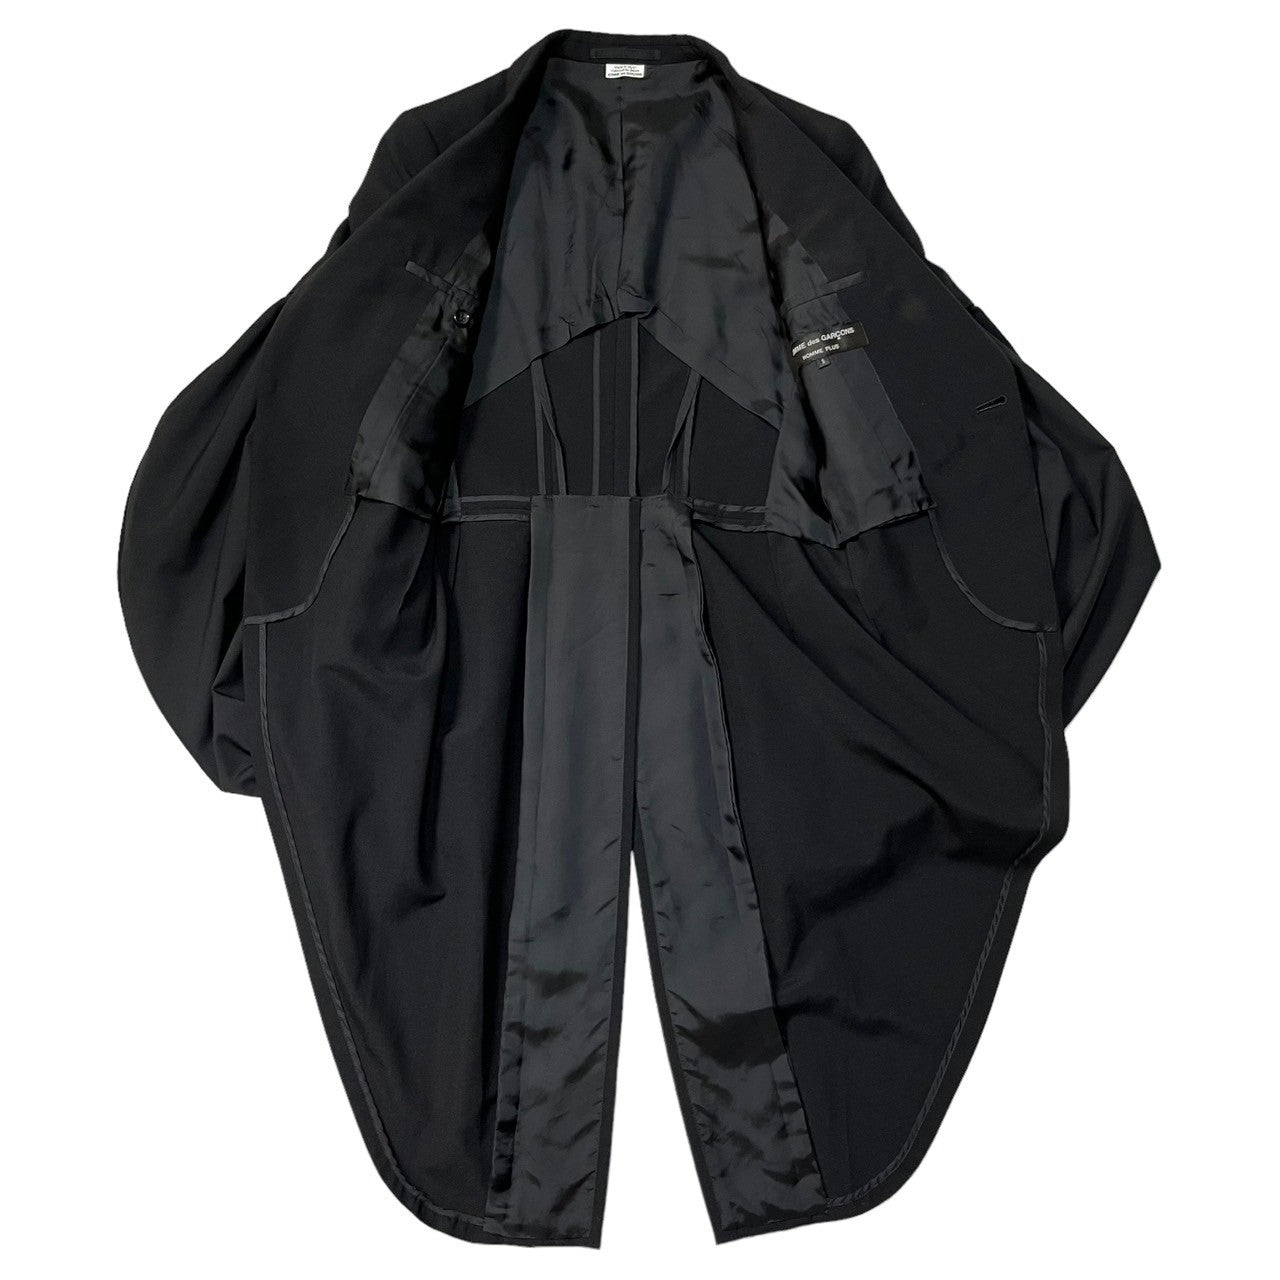 COMME des GARCONS HOMME PLUS(コムデギャルソンオムプリュス) 20SS オルランド期 puff sleeve swallowtail jacket パフスリーブ 燕尾 ジャケット PE-J030 S ブラック AD2019 オーランド期 名作